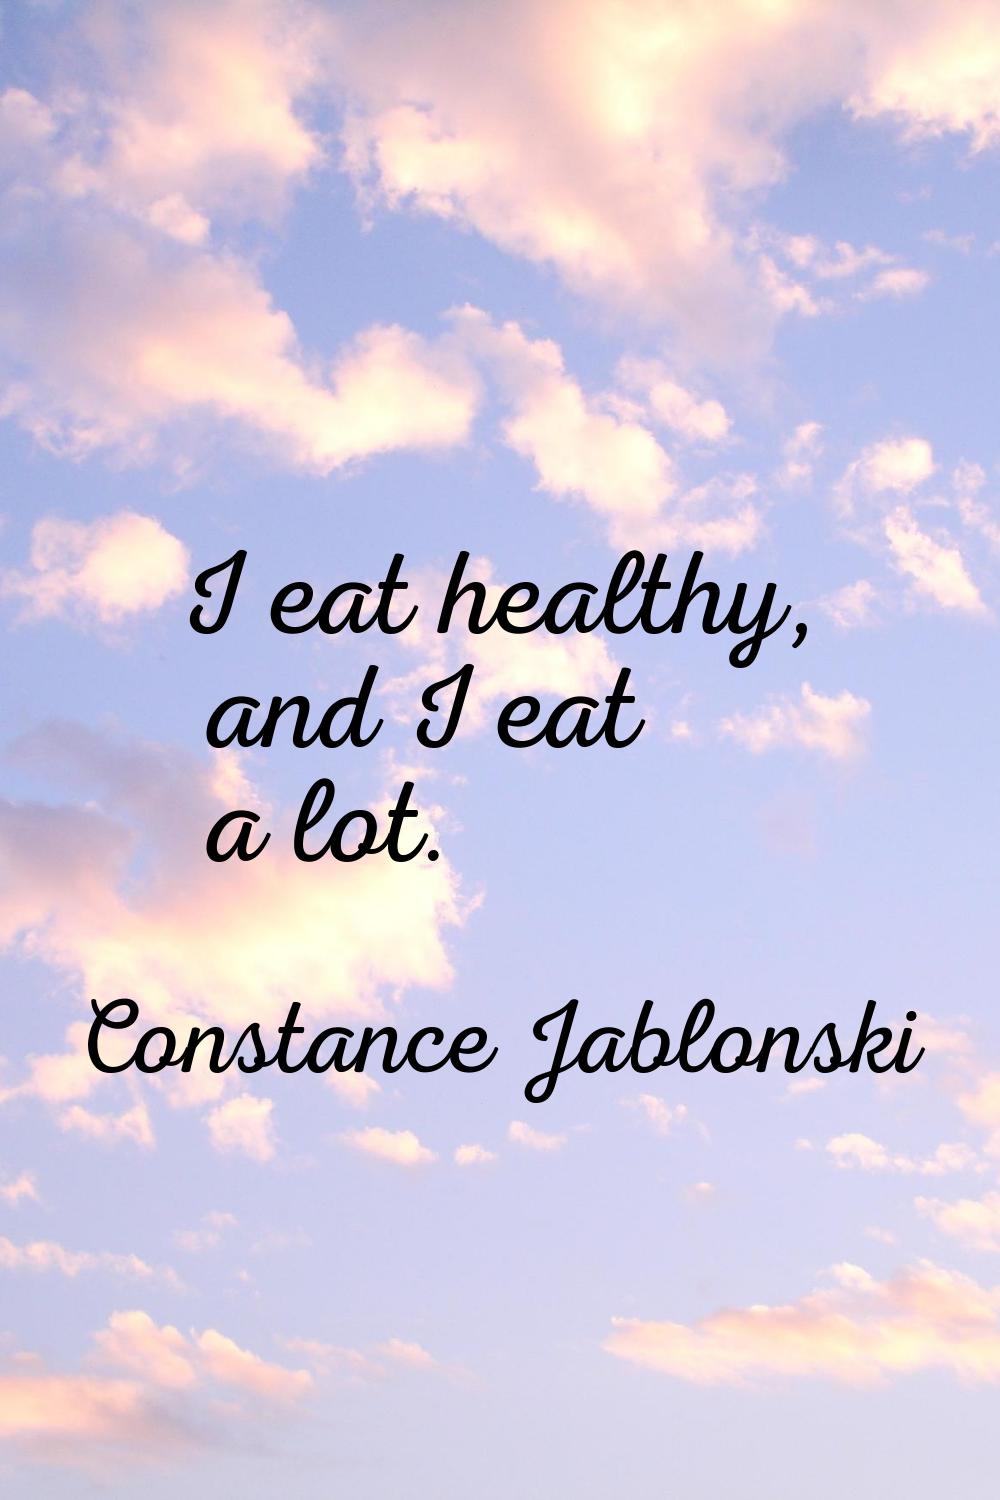 I eat healthy, and I eat a lot.